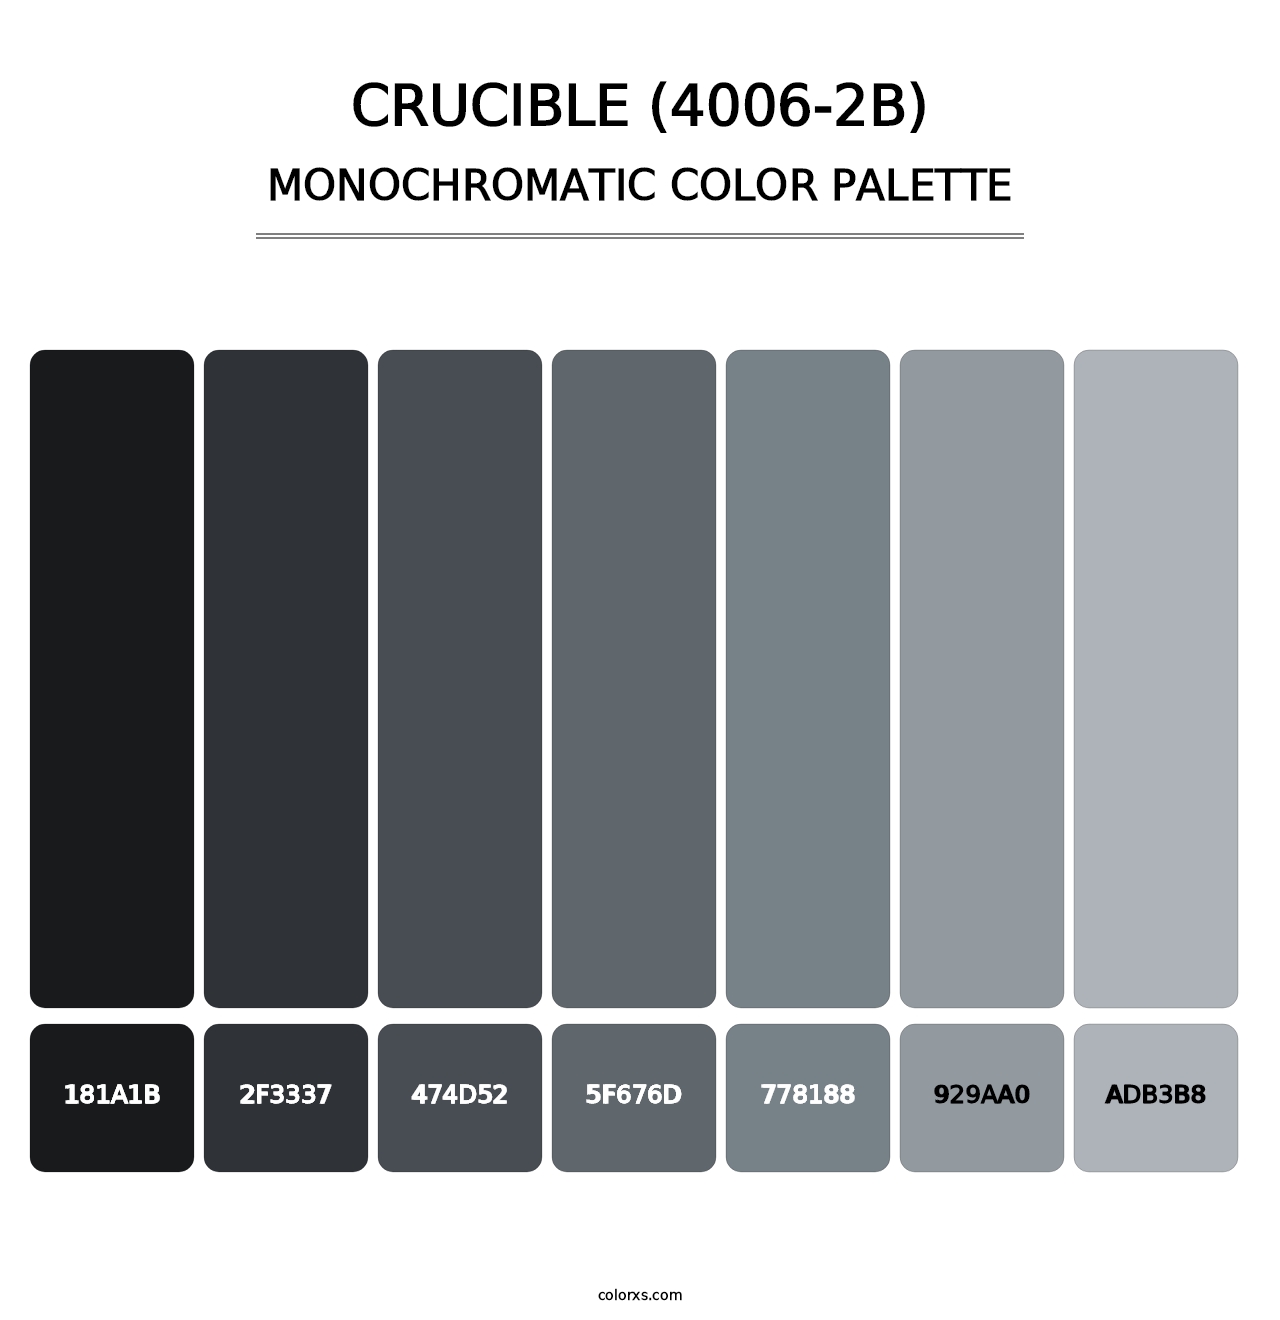 Crucible (4006-2B) - Monochromatic Color Palette